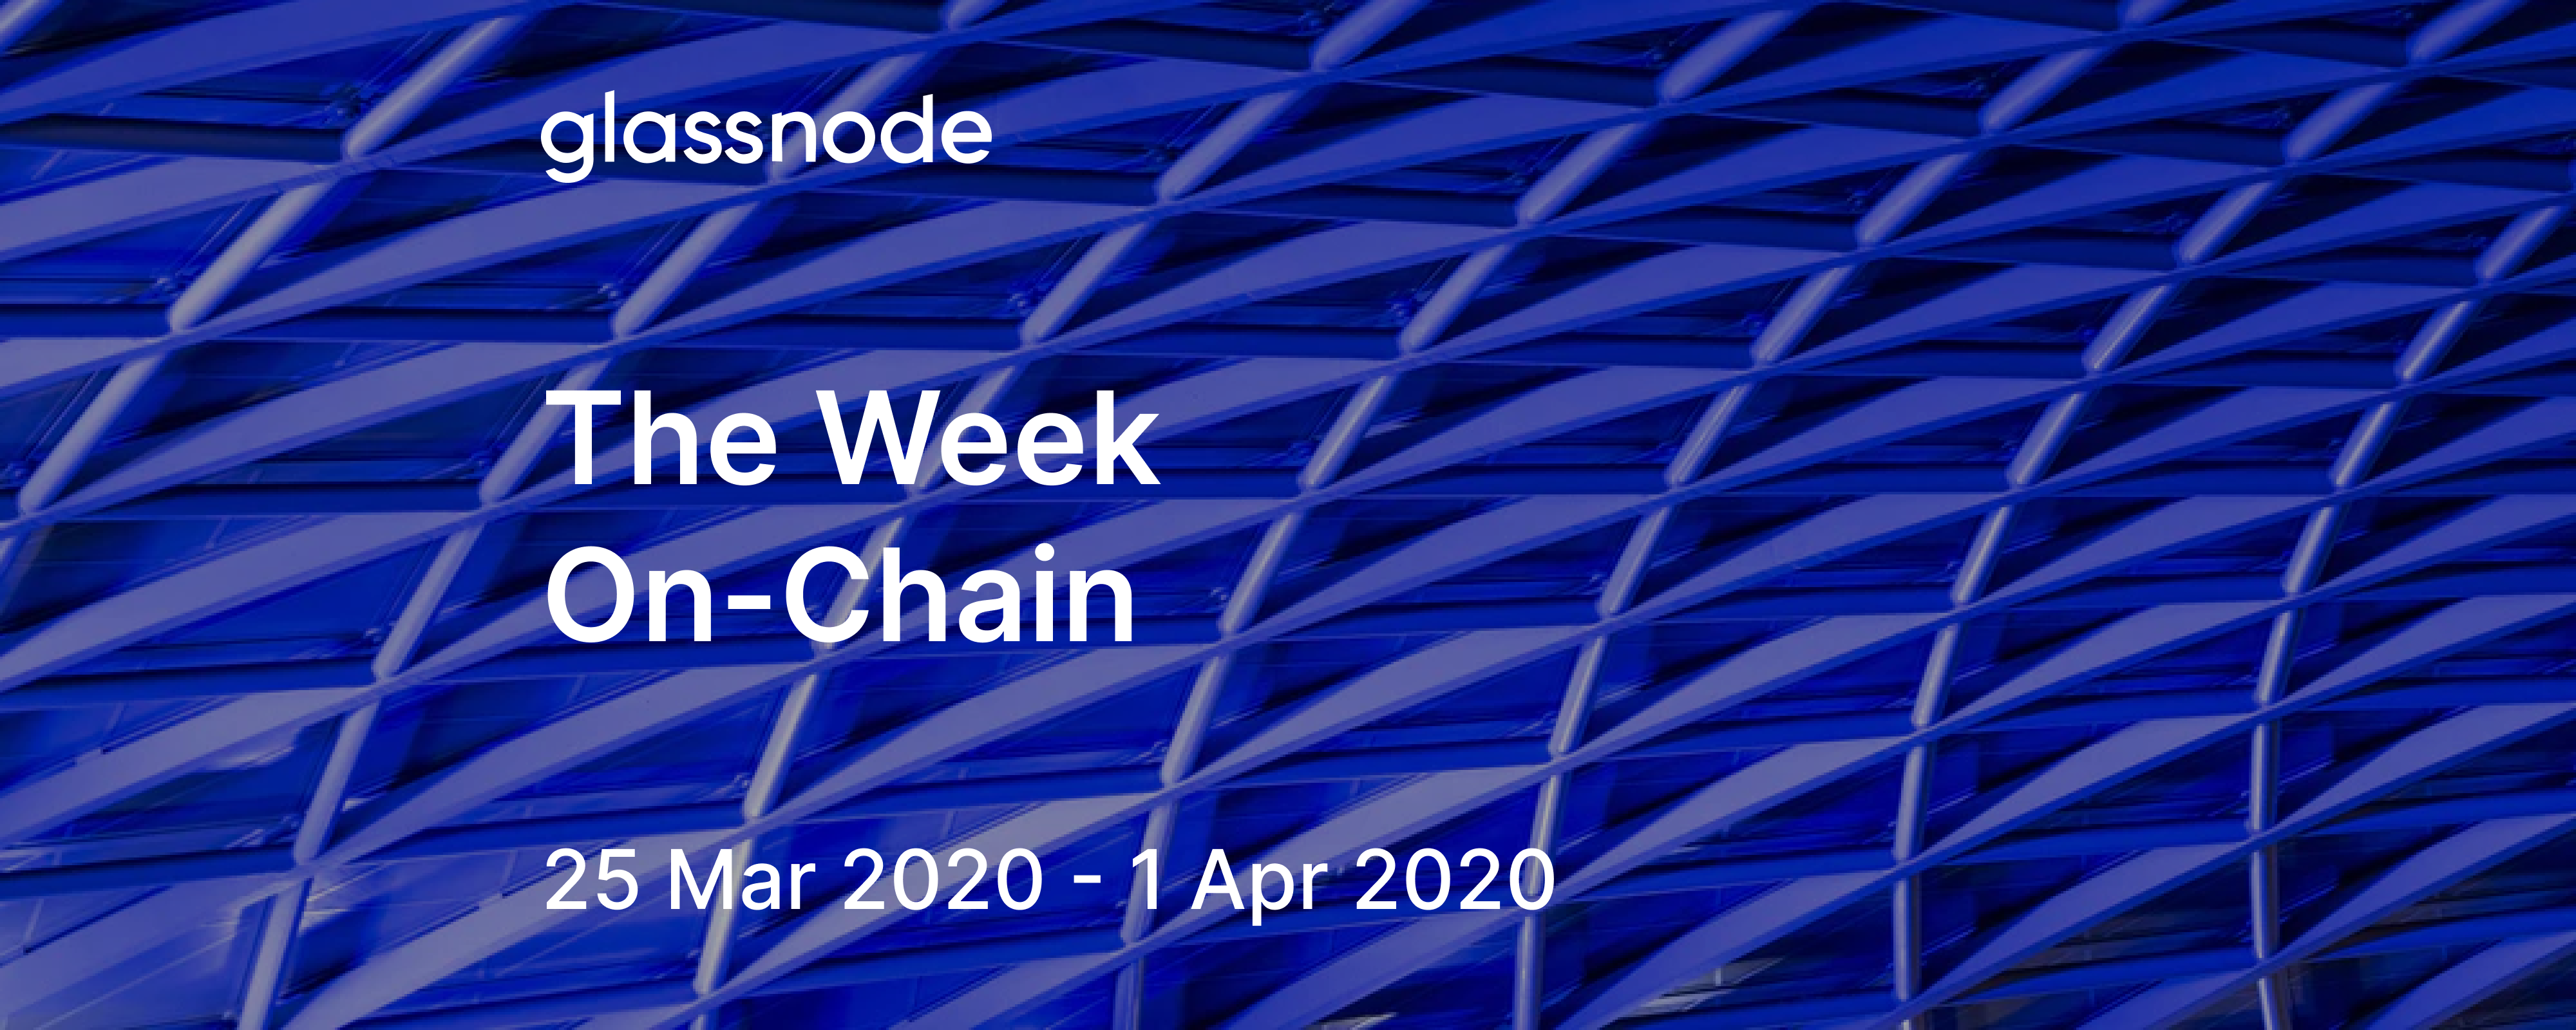 The Week On-Chain (25 Mar 2020 - 1 Apr 2020)